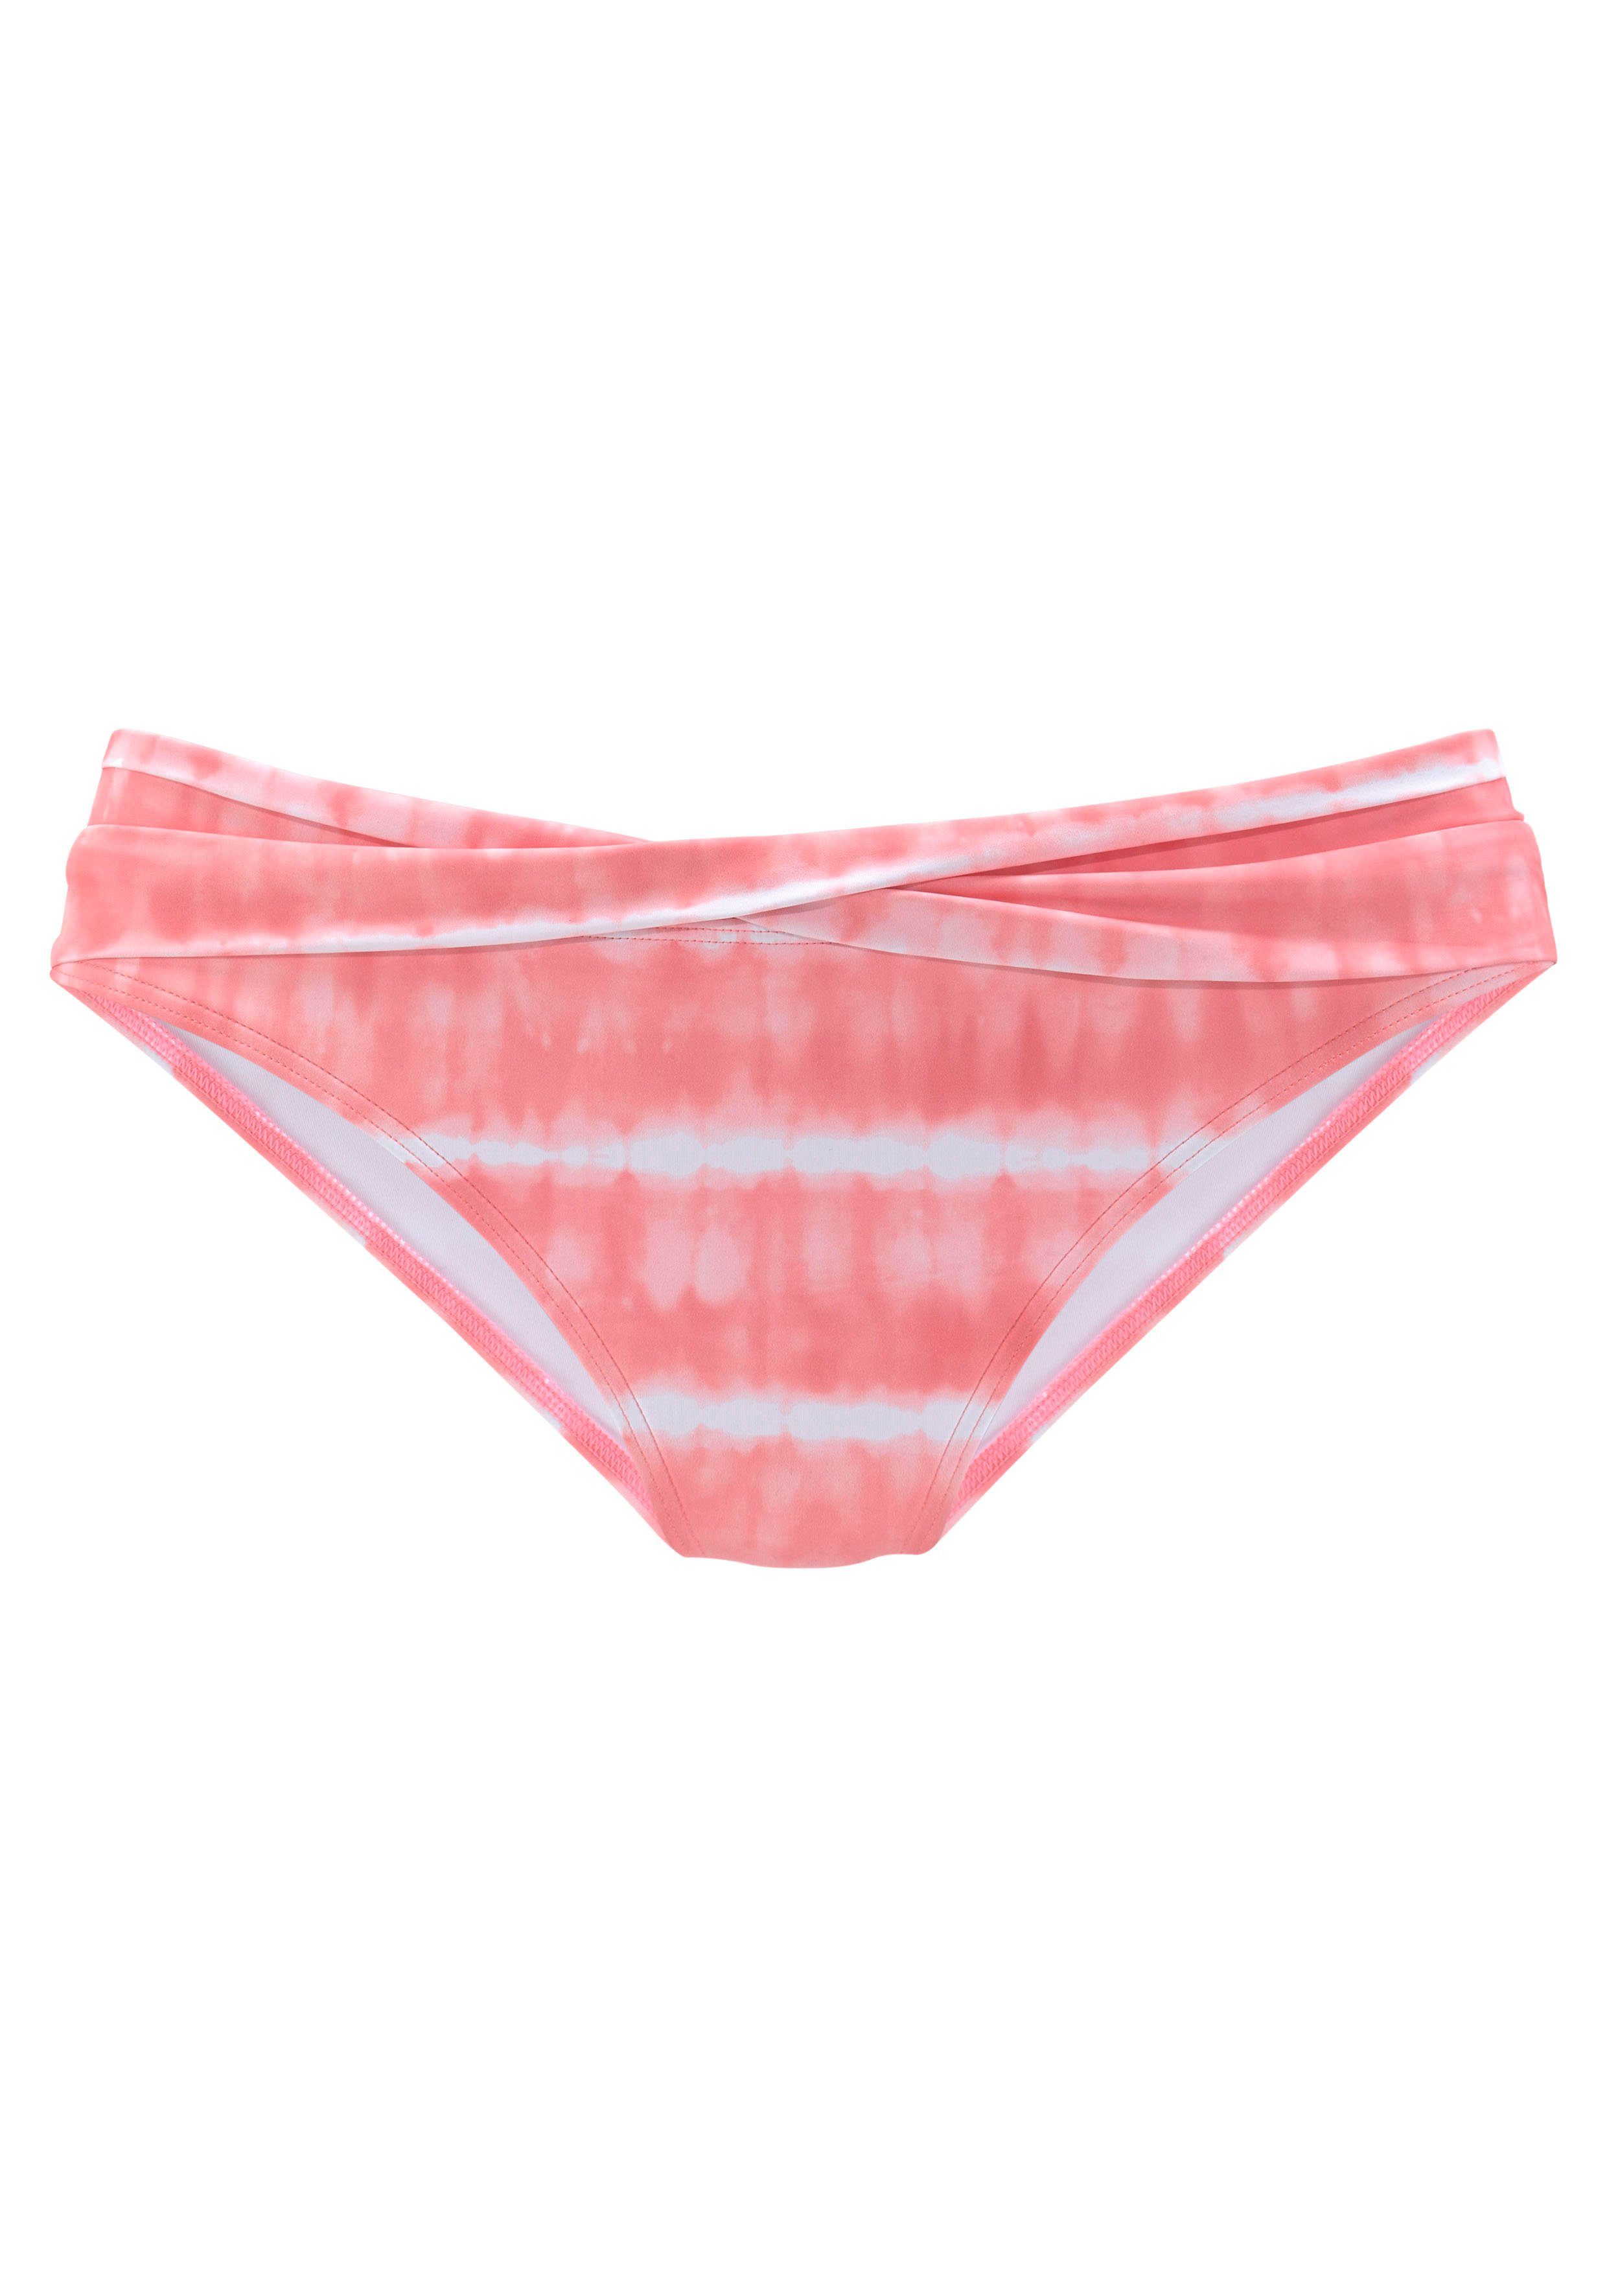 s.oliver red label beachwear bikinibroekje enja met omslagband in v-model roze